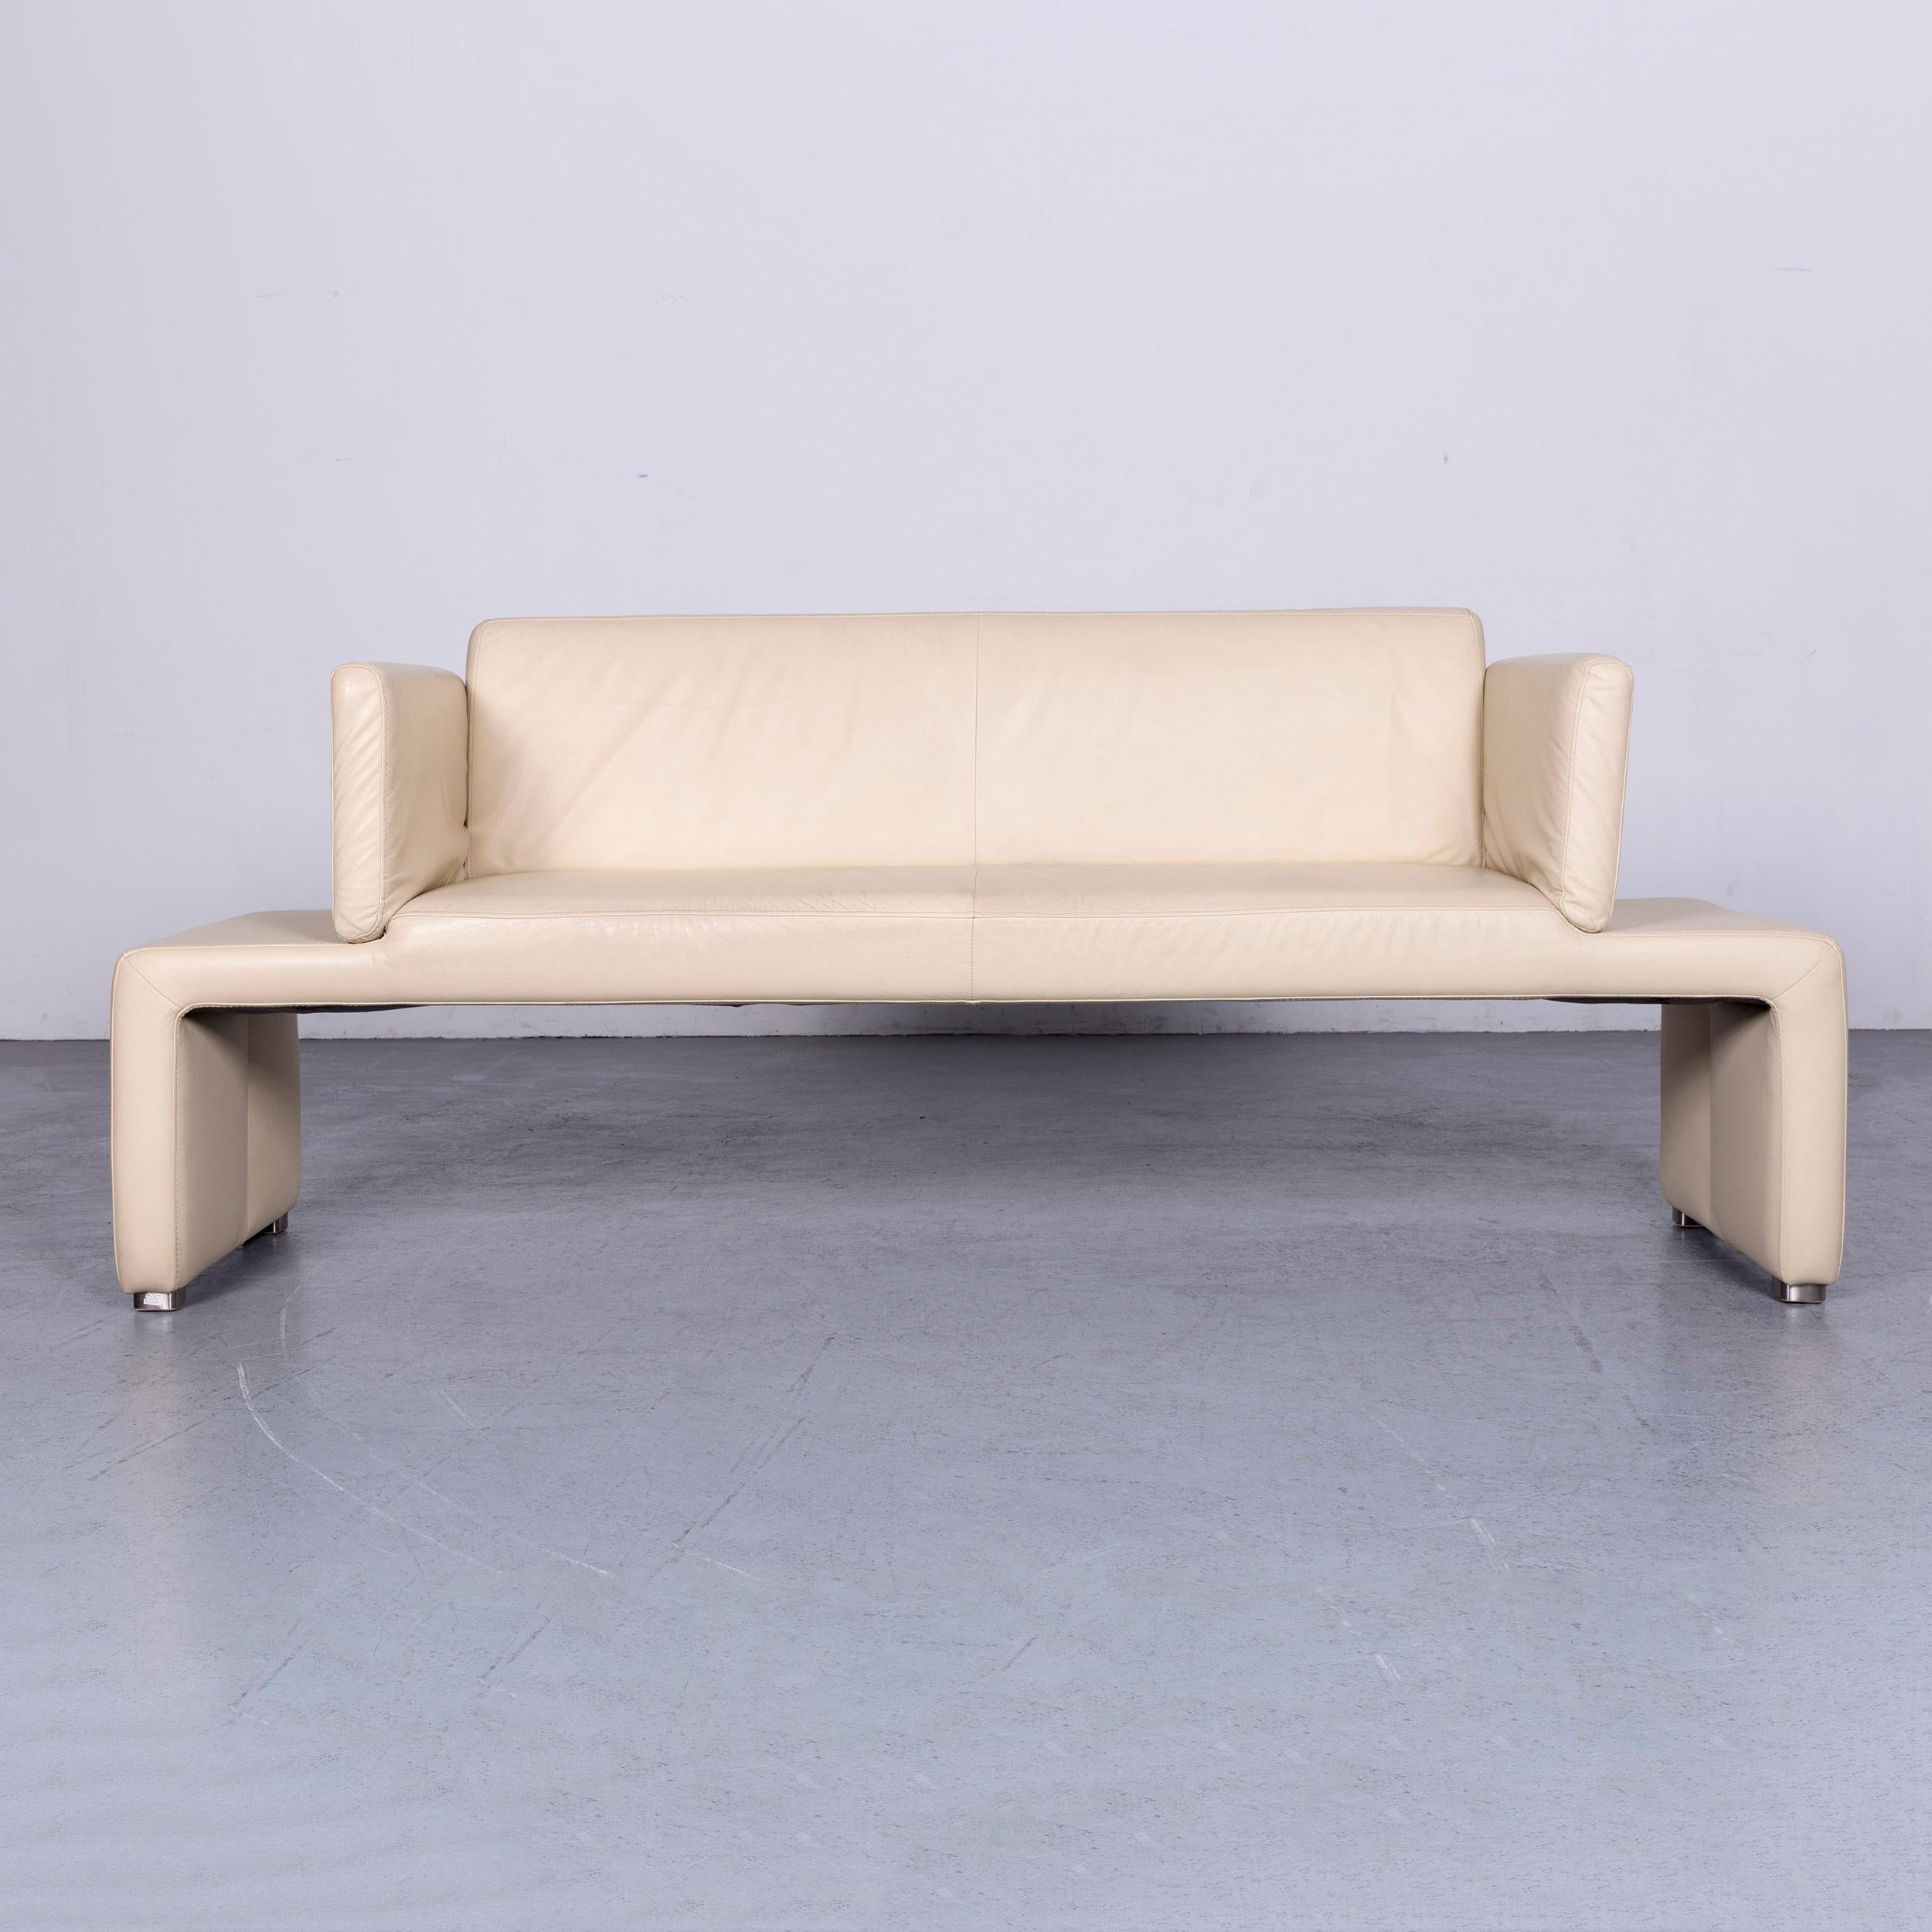 German Willi Schillig Designer Leather Sofa Crème Three-Seat Couch For Sale